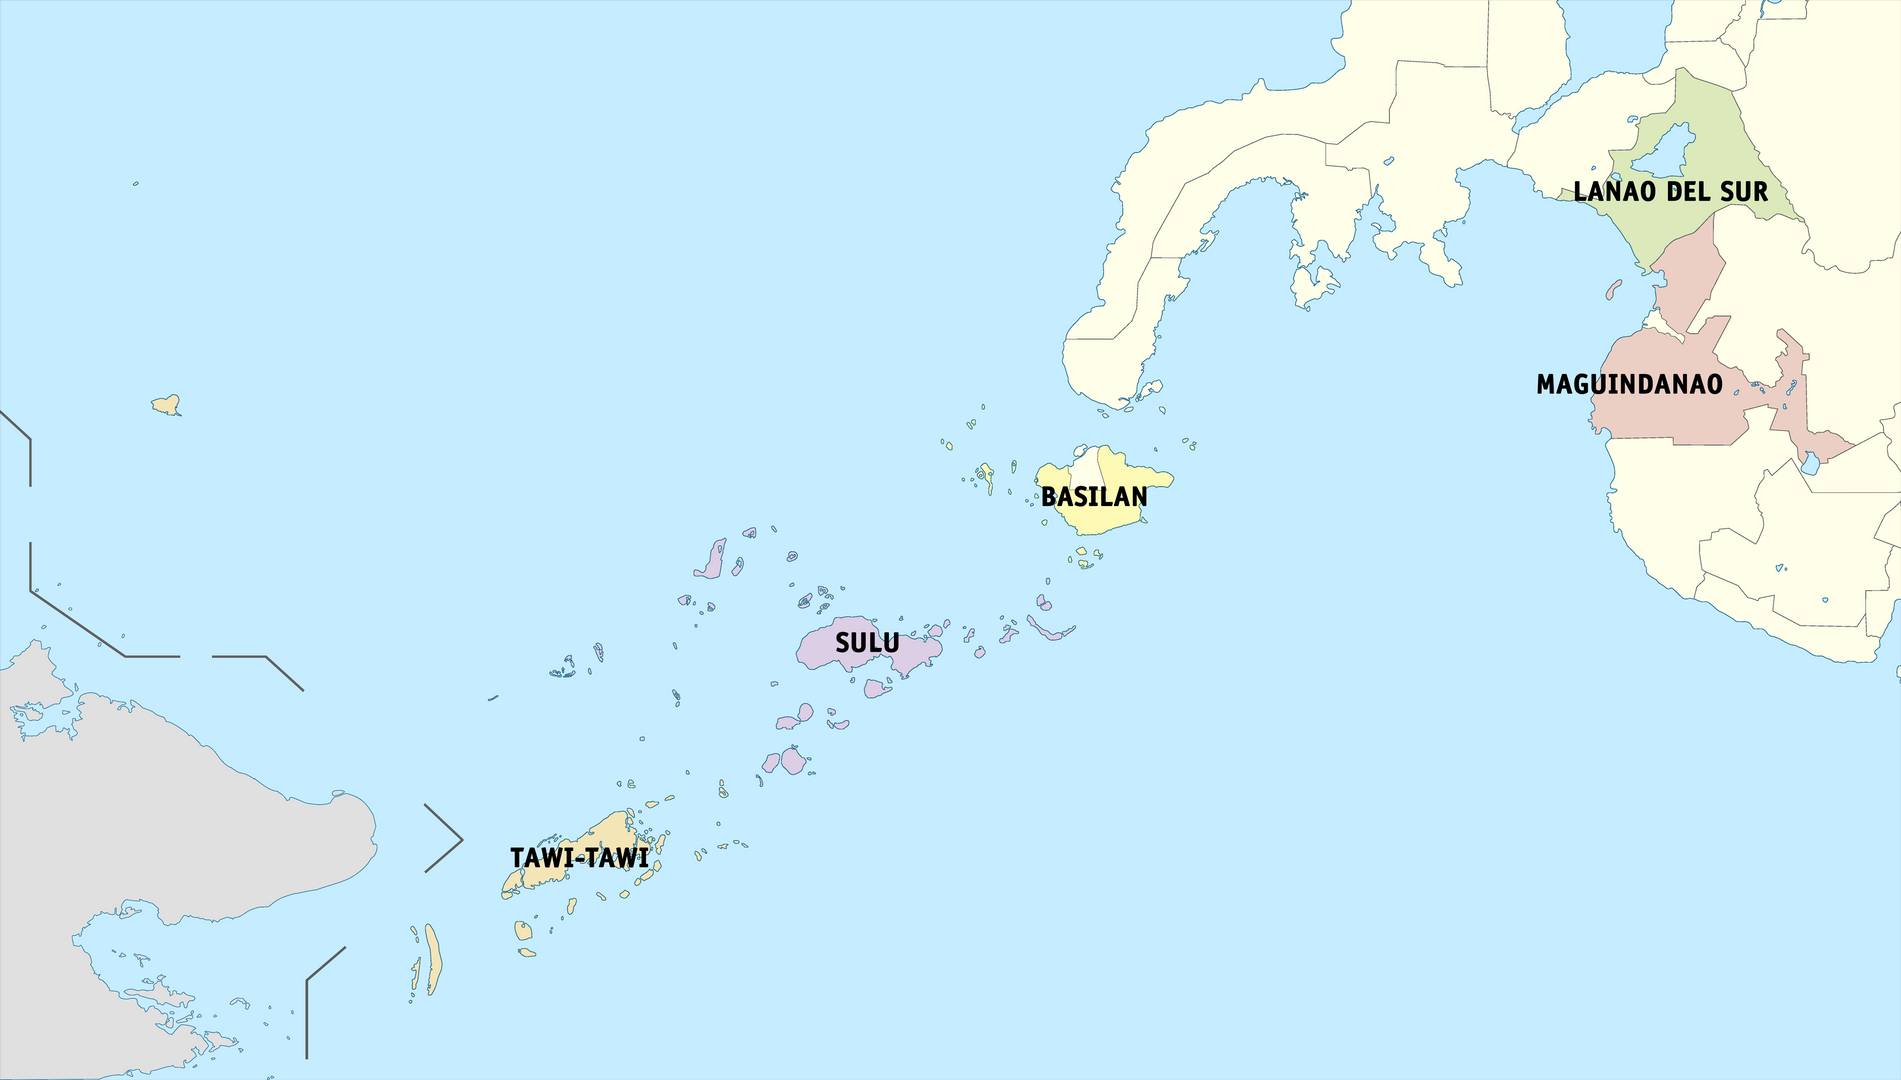 Провинций Автономного региона в Мусульманском Минданао (Бангсаморо)